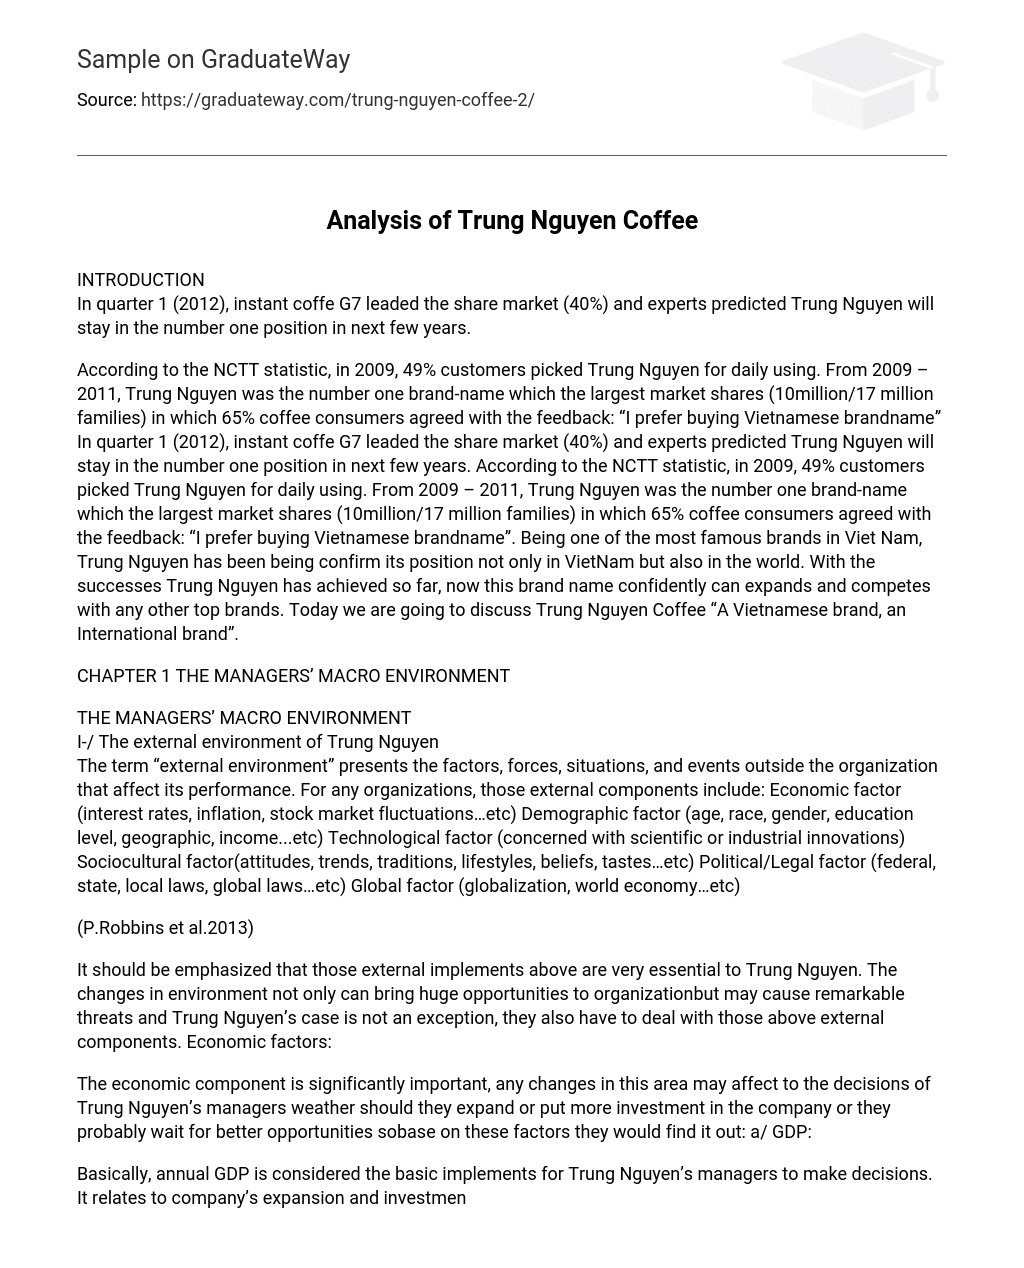 Analysis of Trung Nguyen Coffee